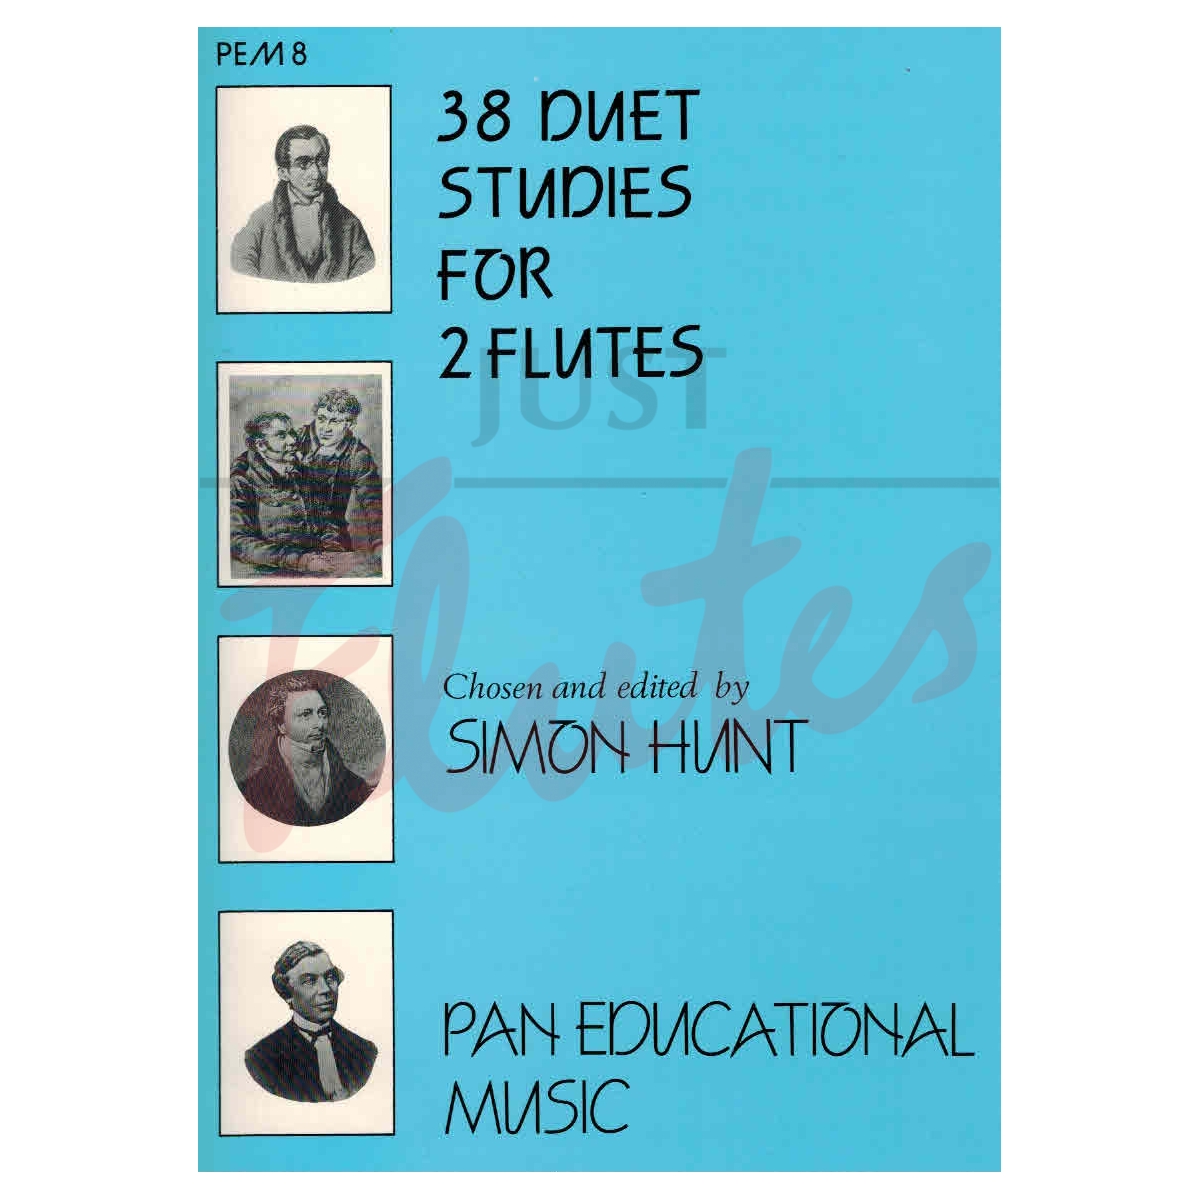 38 Duet Studies for Two Flutes